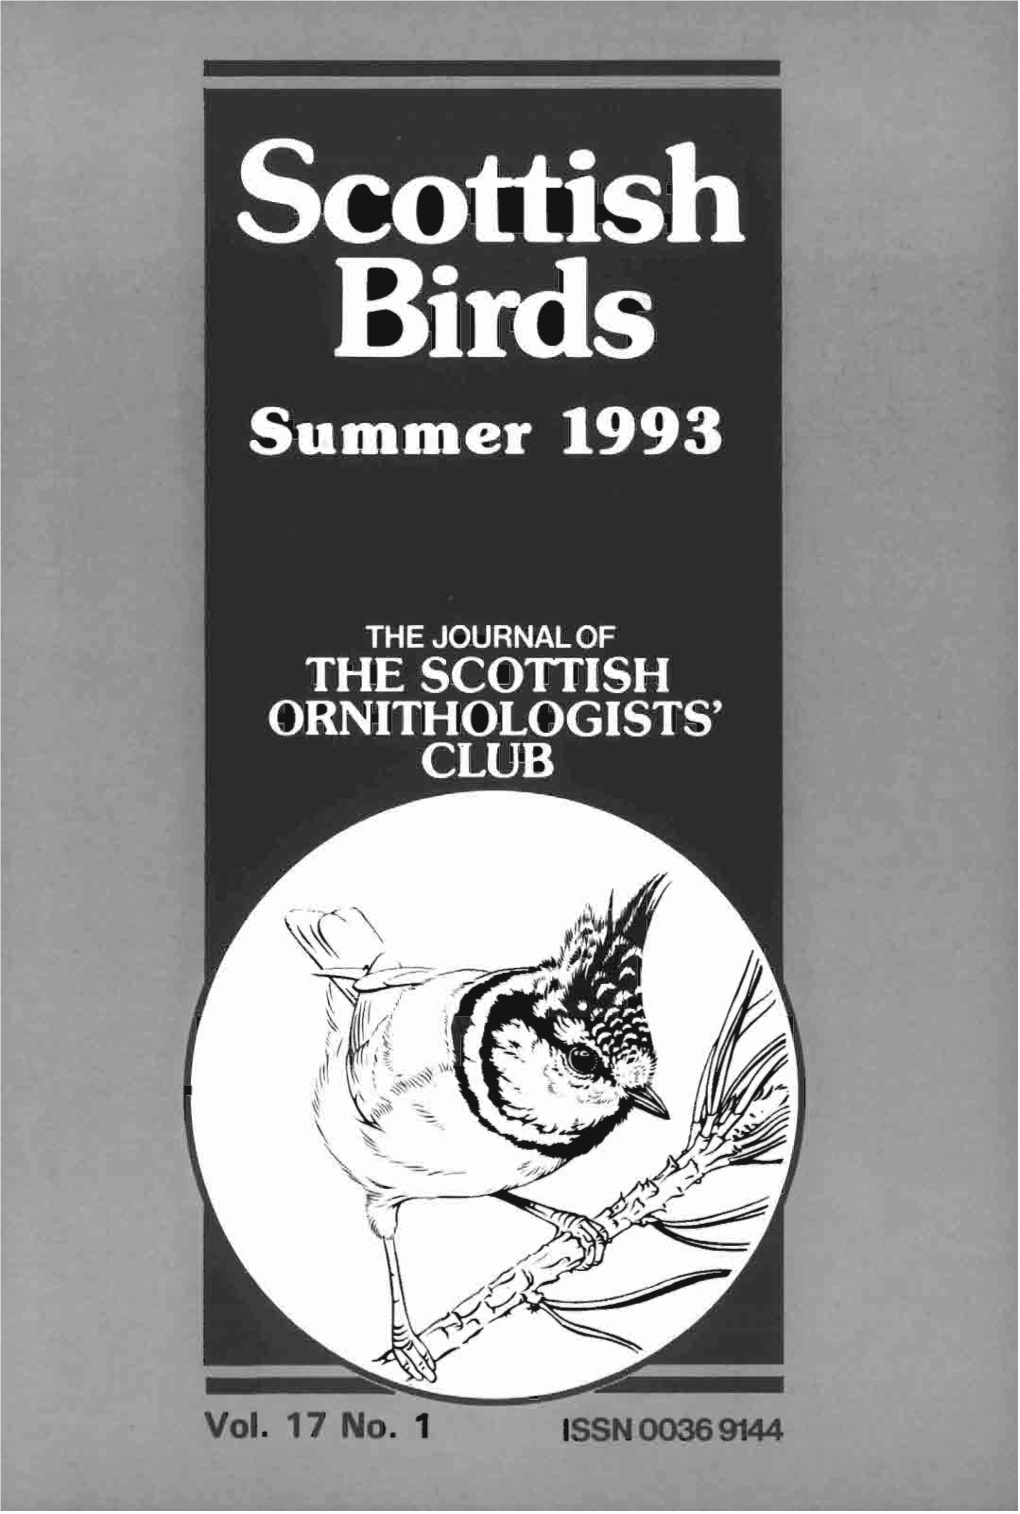 Vol. 17 No. 1 ISSN 00389M4 Scottish Birds the Journal of the Scottish Ornithologists' Club